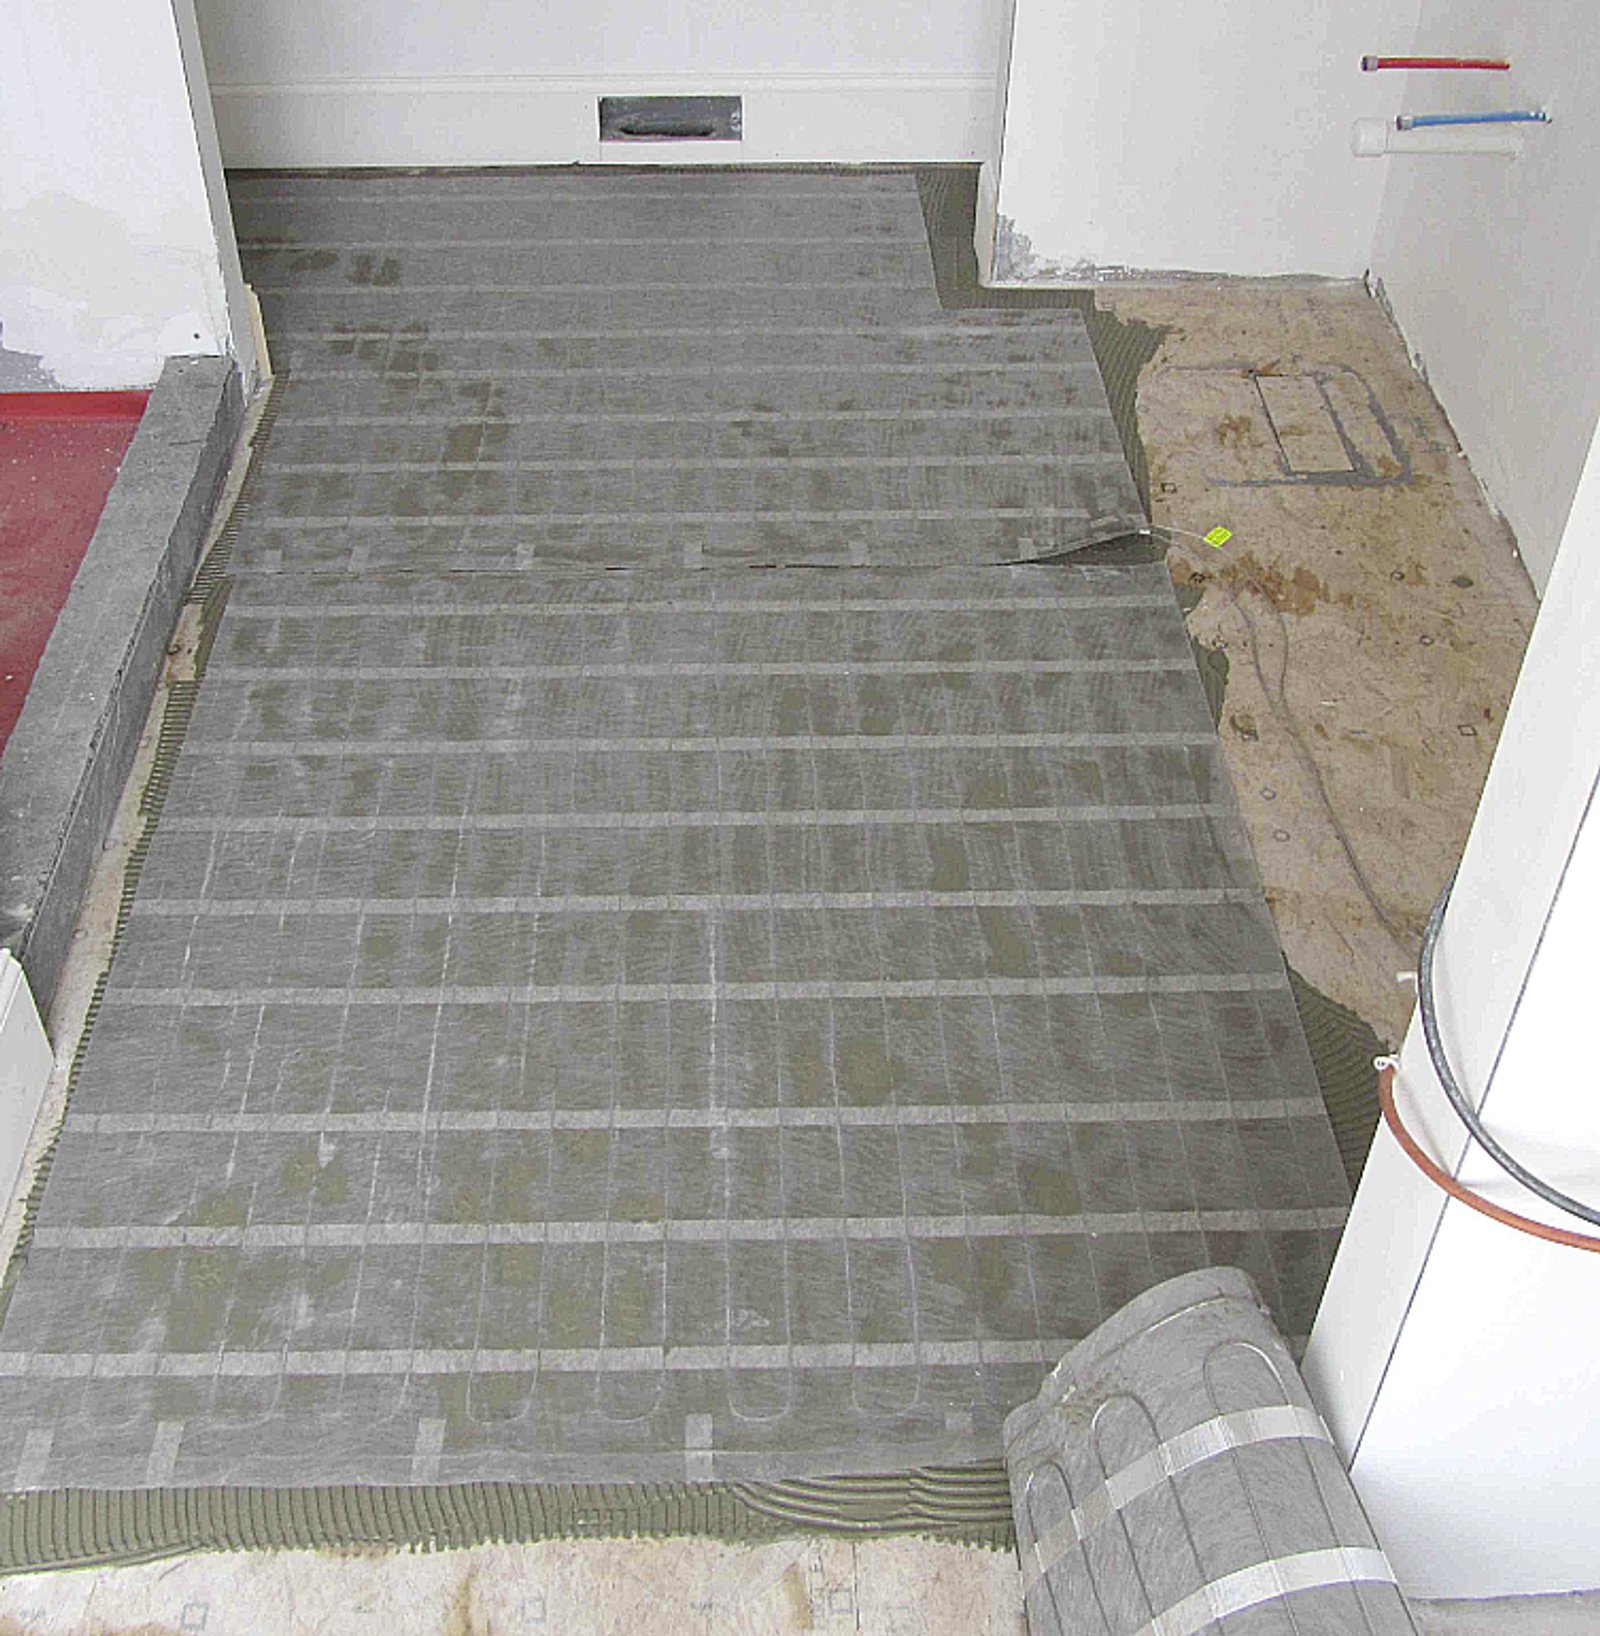 https://ik.warmlyyours.com/tr:w-1600/img/custom-tempzone-heating-mat-installation-for-bathroom-floor-58ba63.png